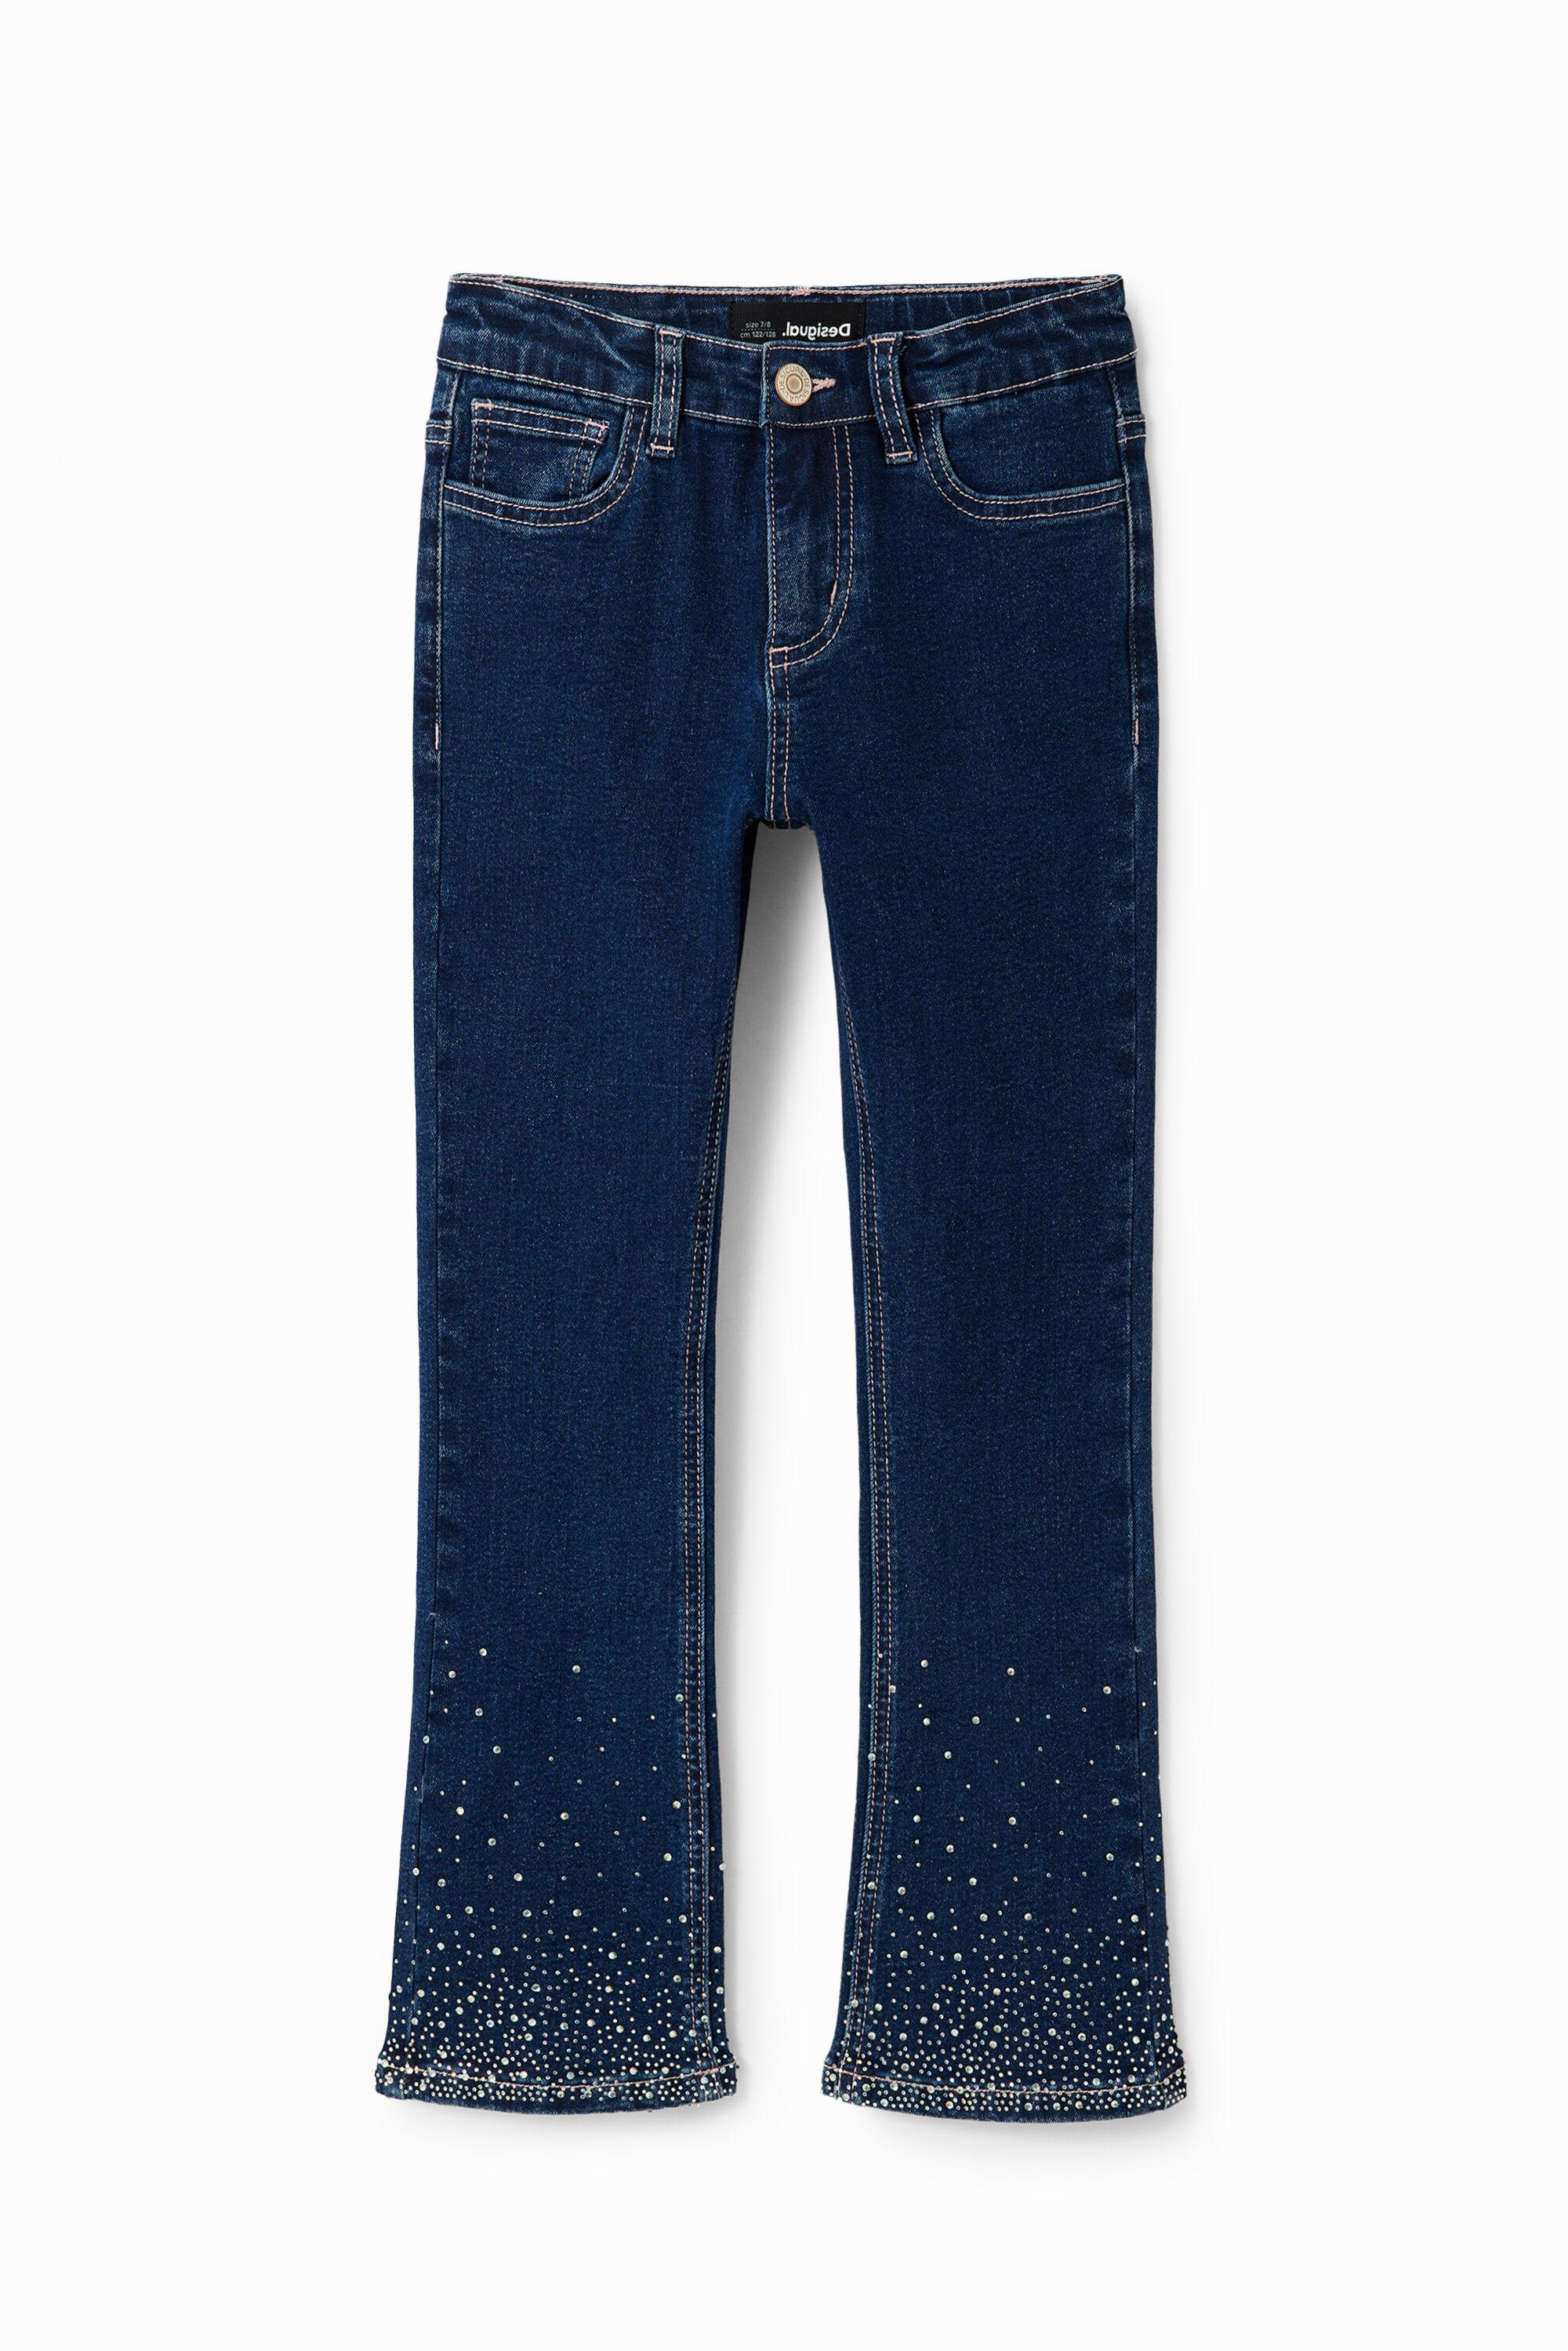 Desigual Rhinestone flare jeans